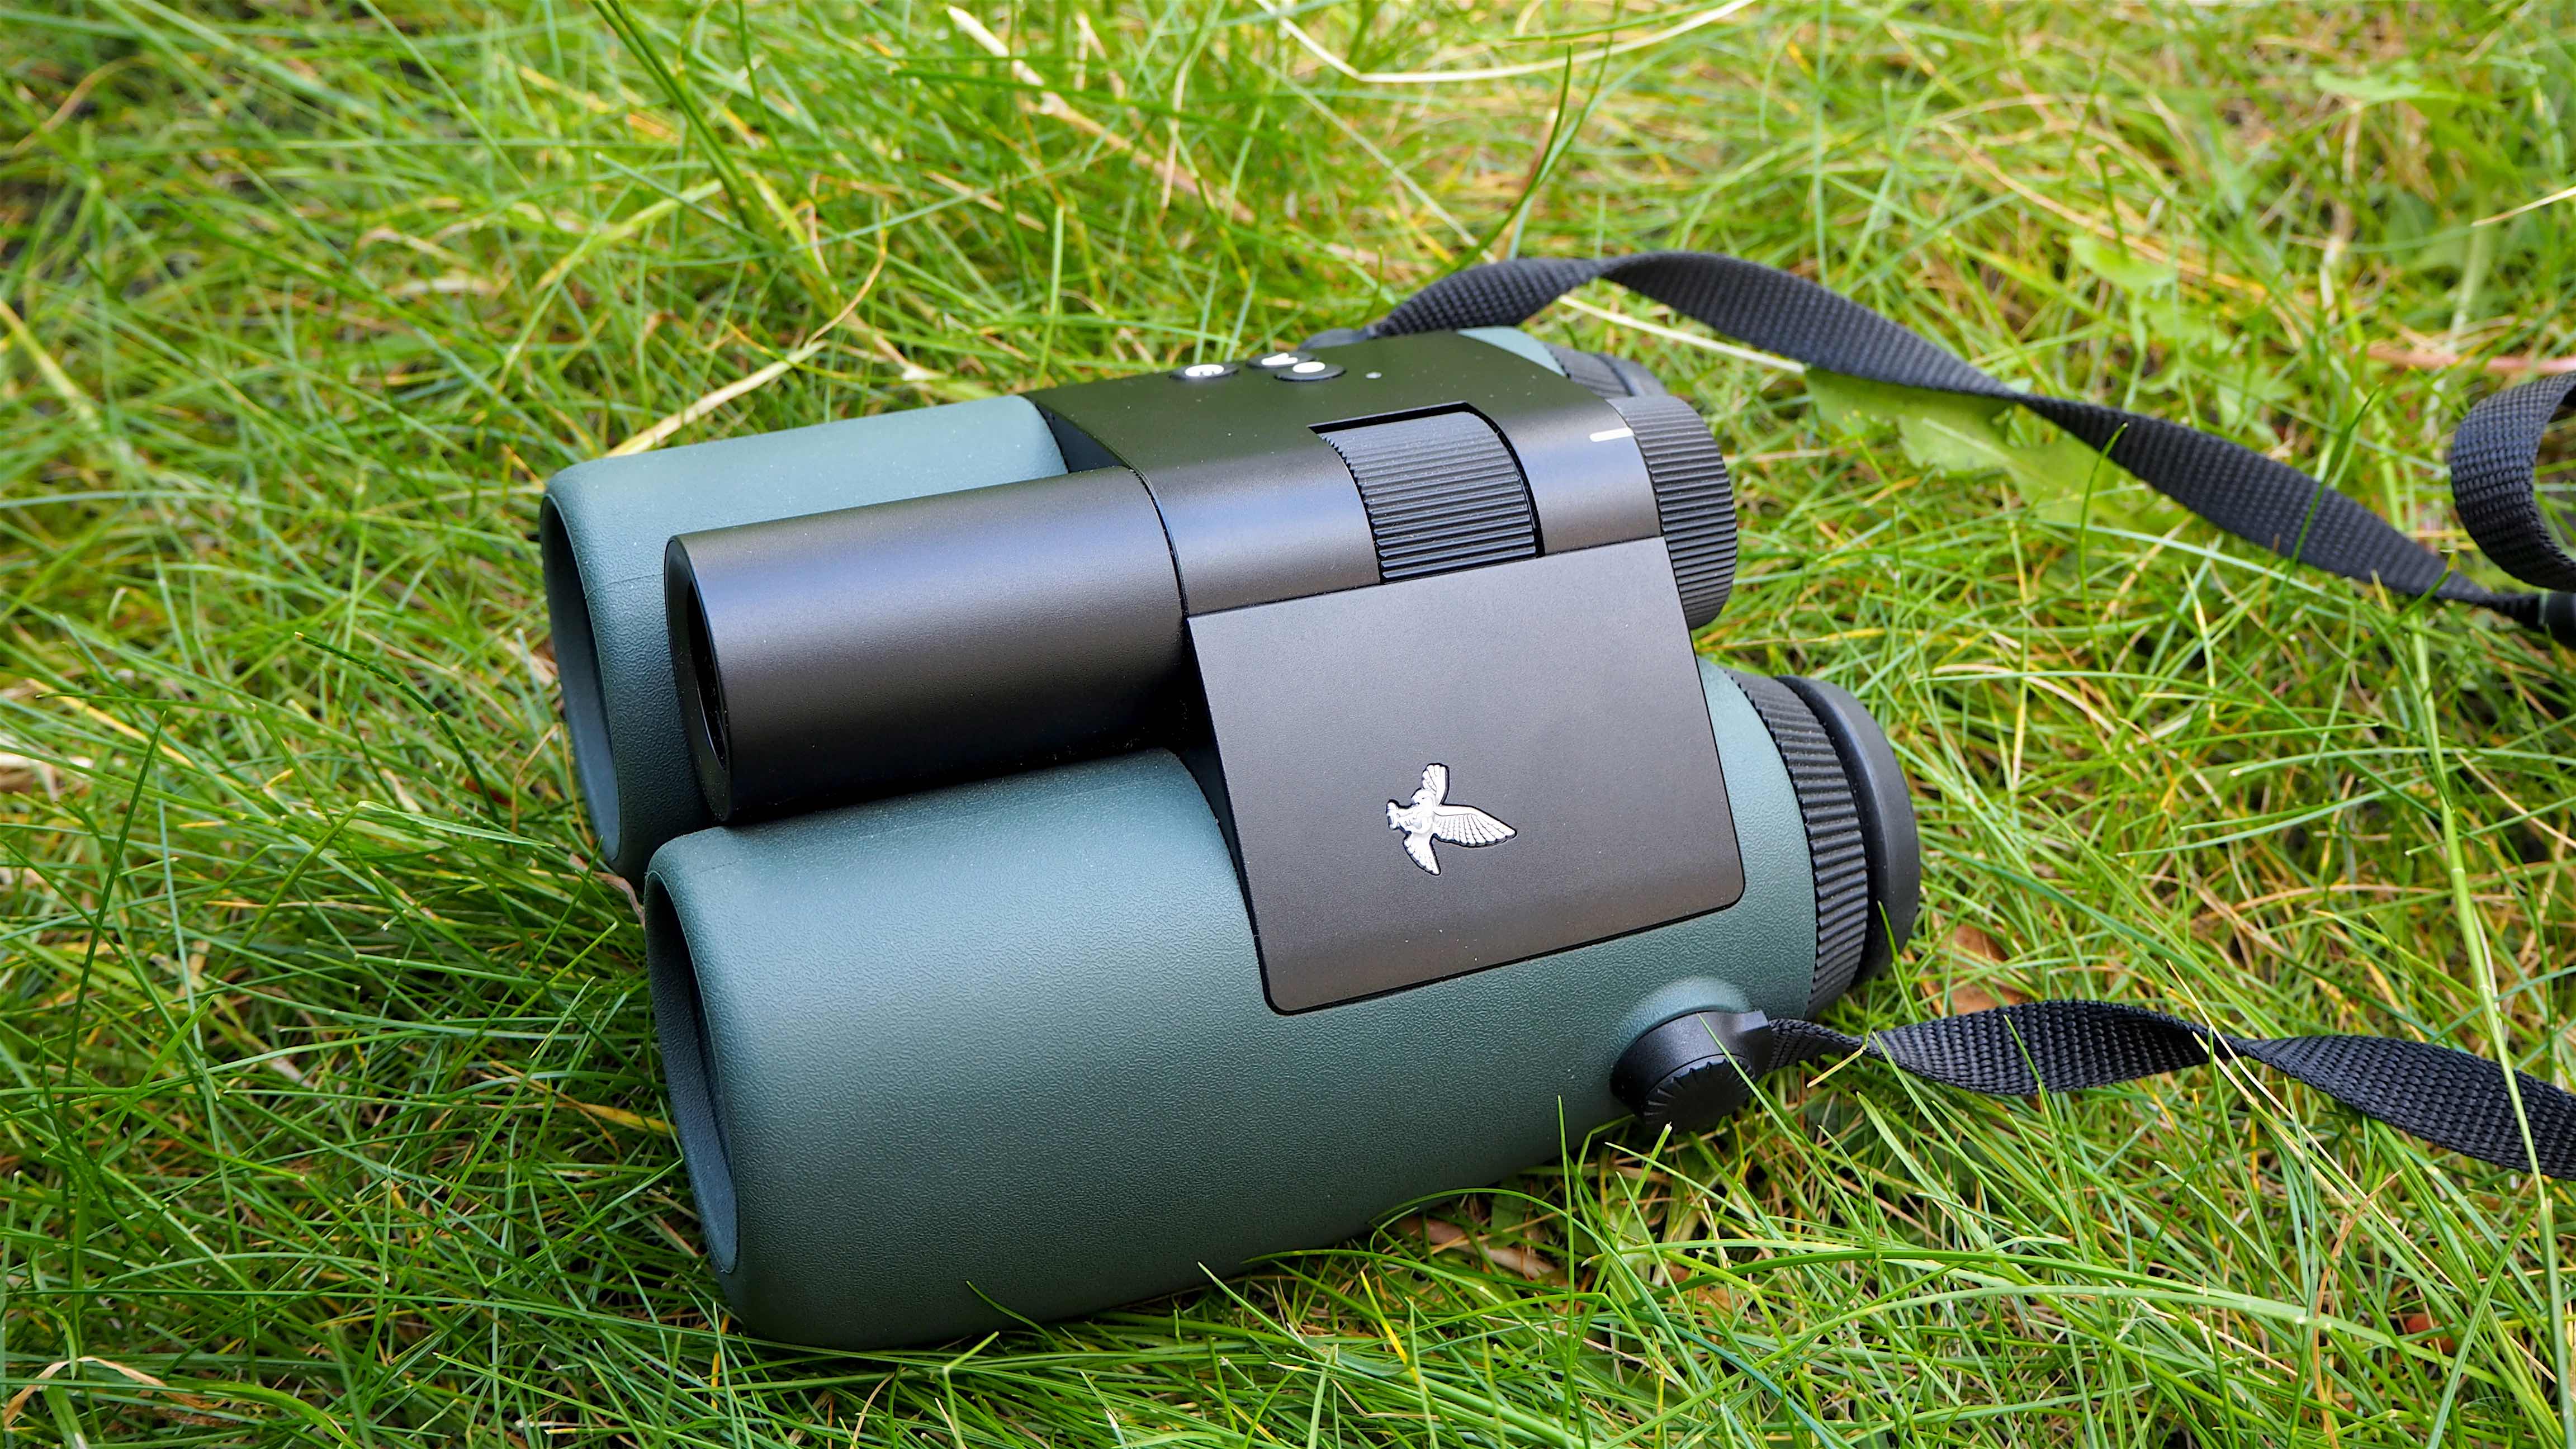 Swarovski AX Visio 10x32 binoculars on grass